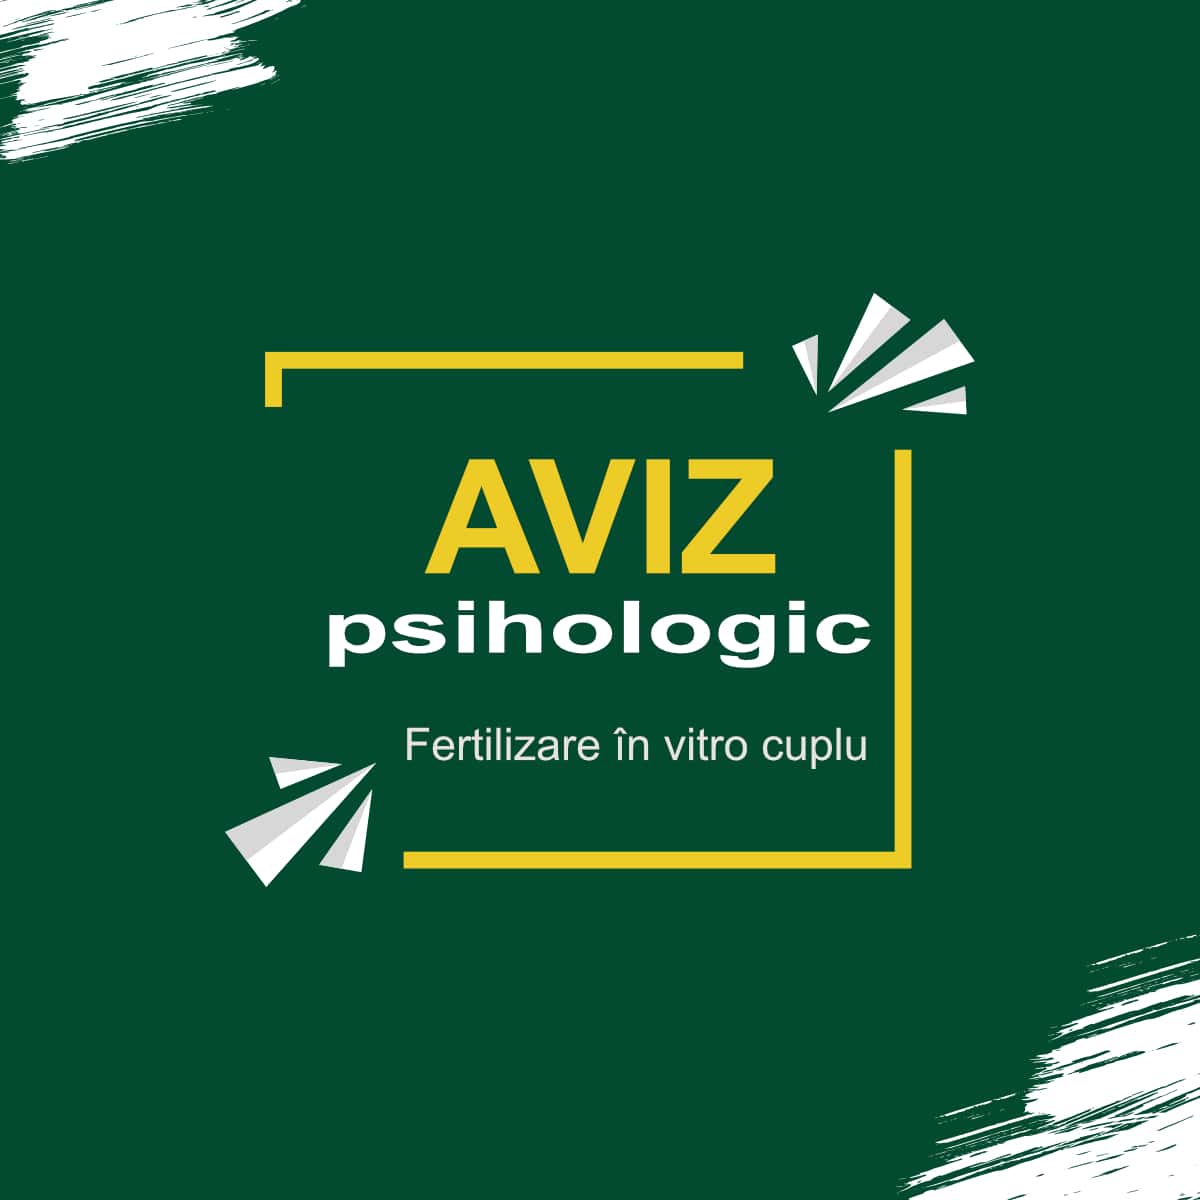 Aviz psihologic FIV cuplu (fertilizare in vitro)